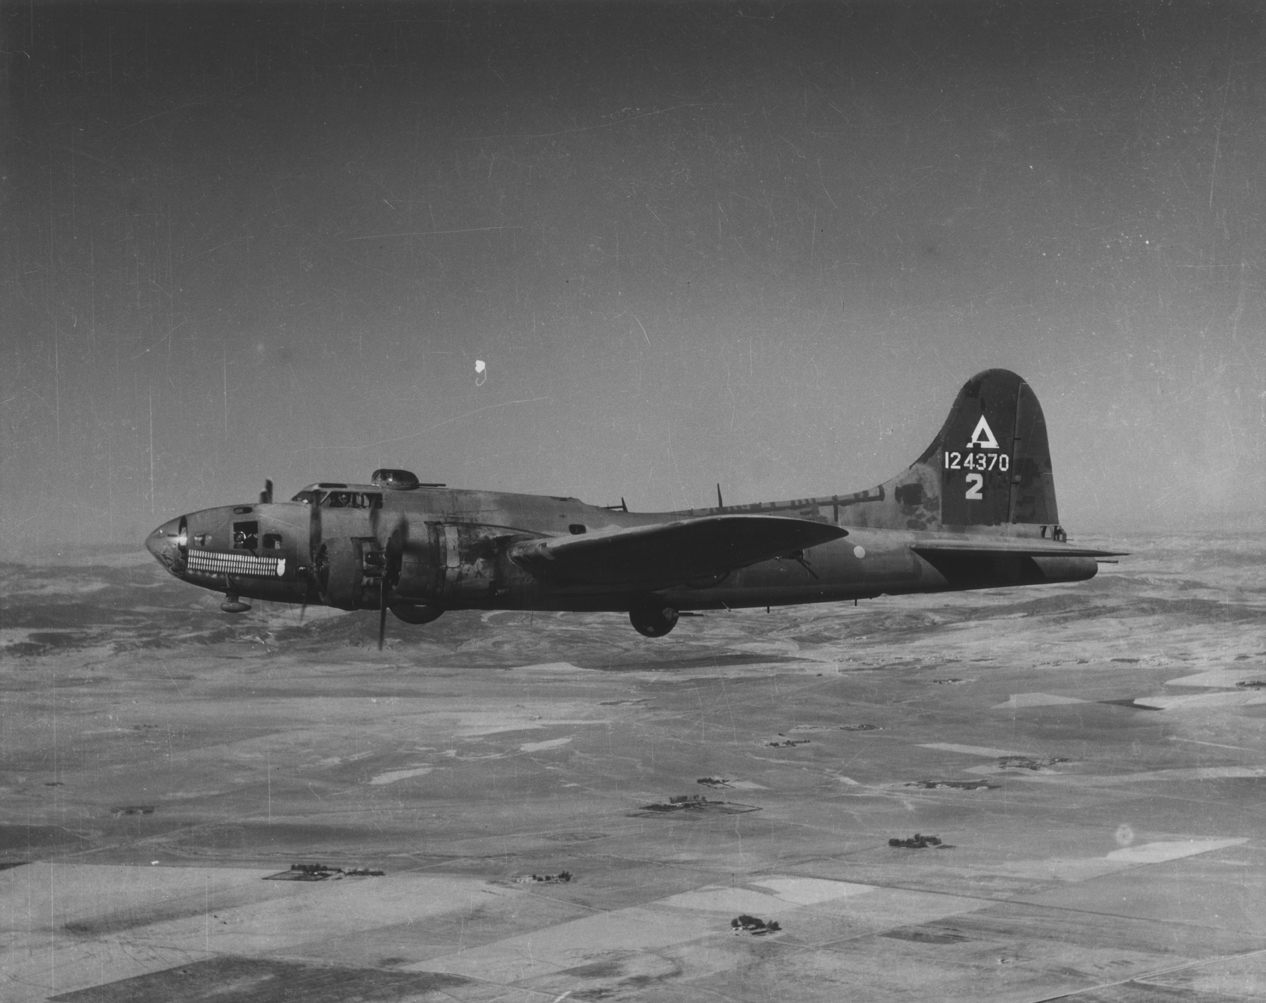 B-17 #41-24370 / Pale Face aka Berlin Sleeper II